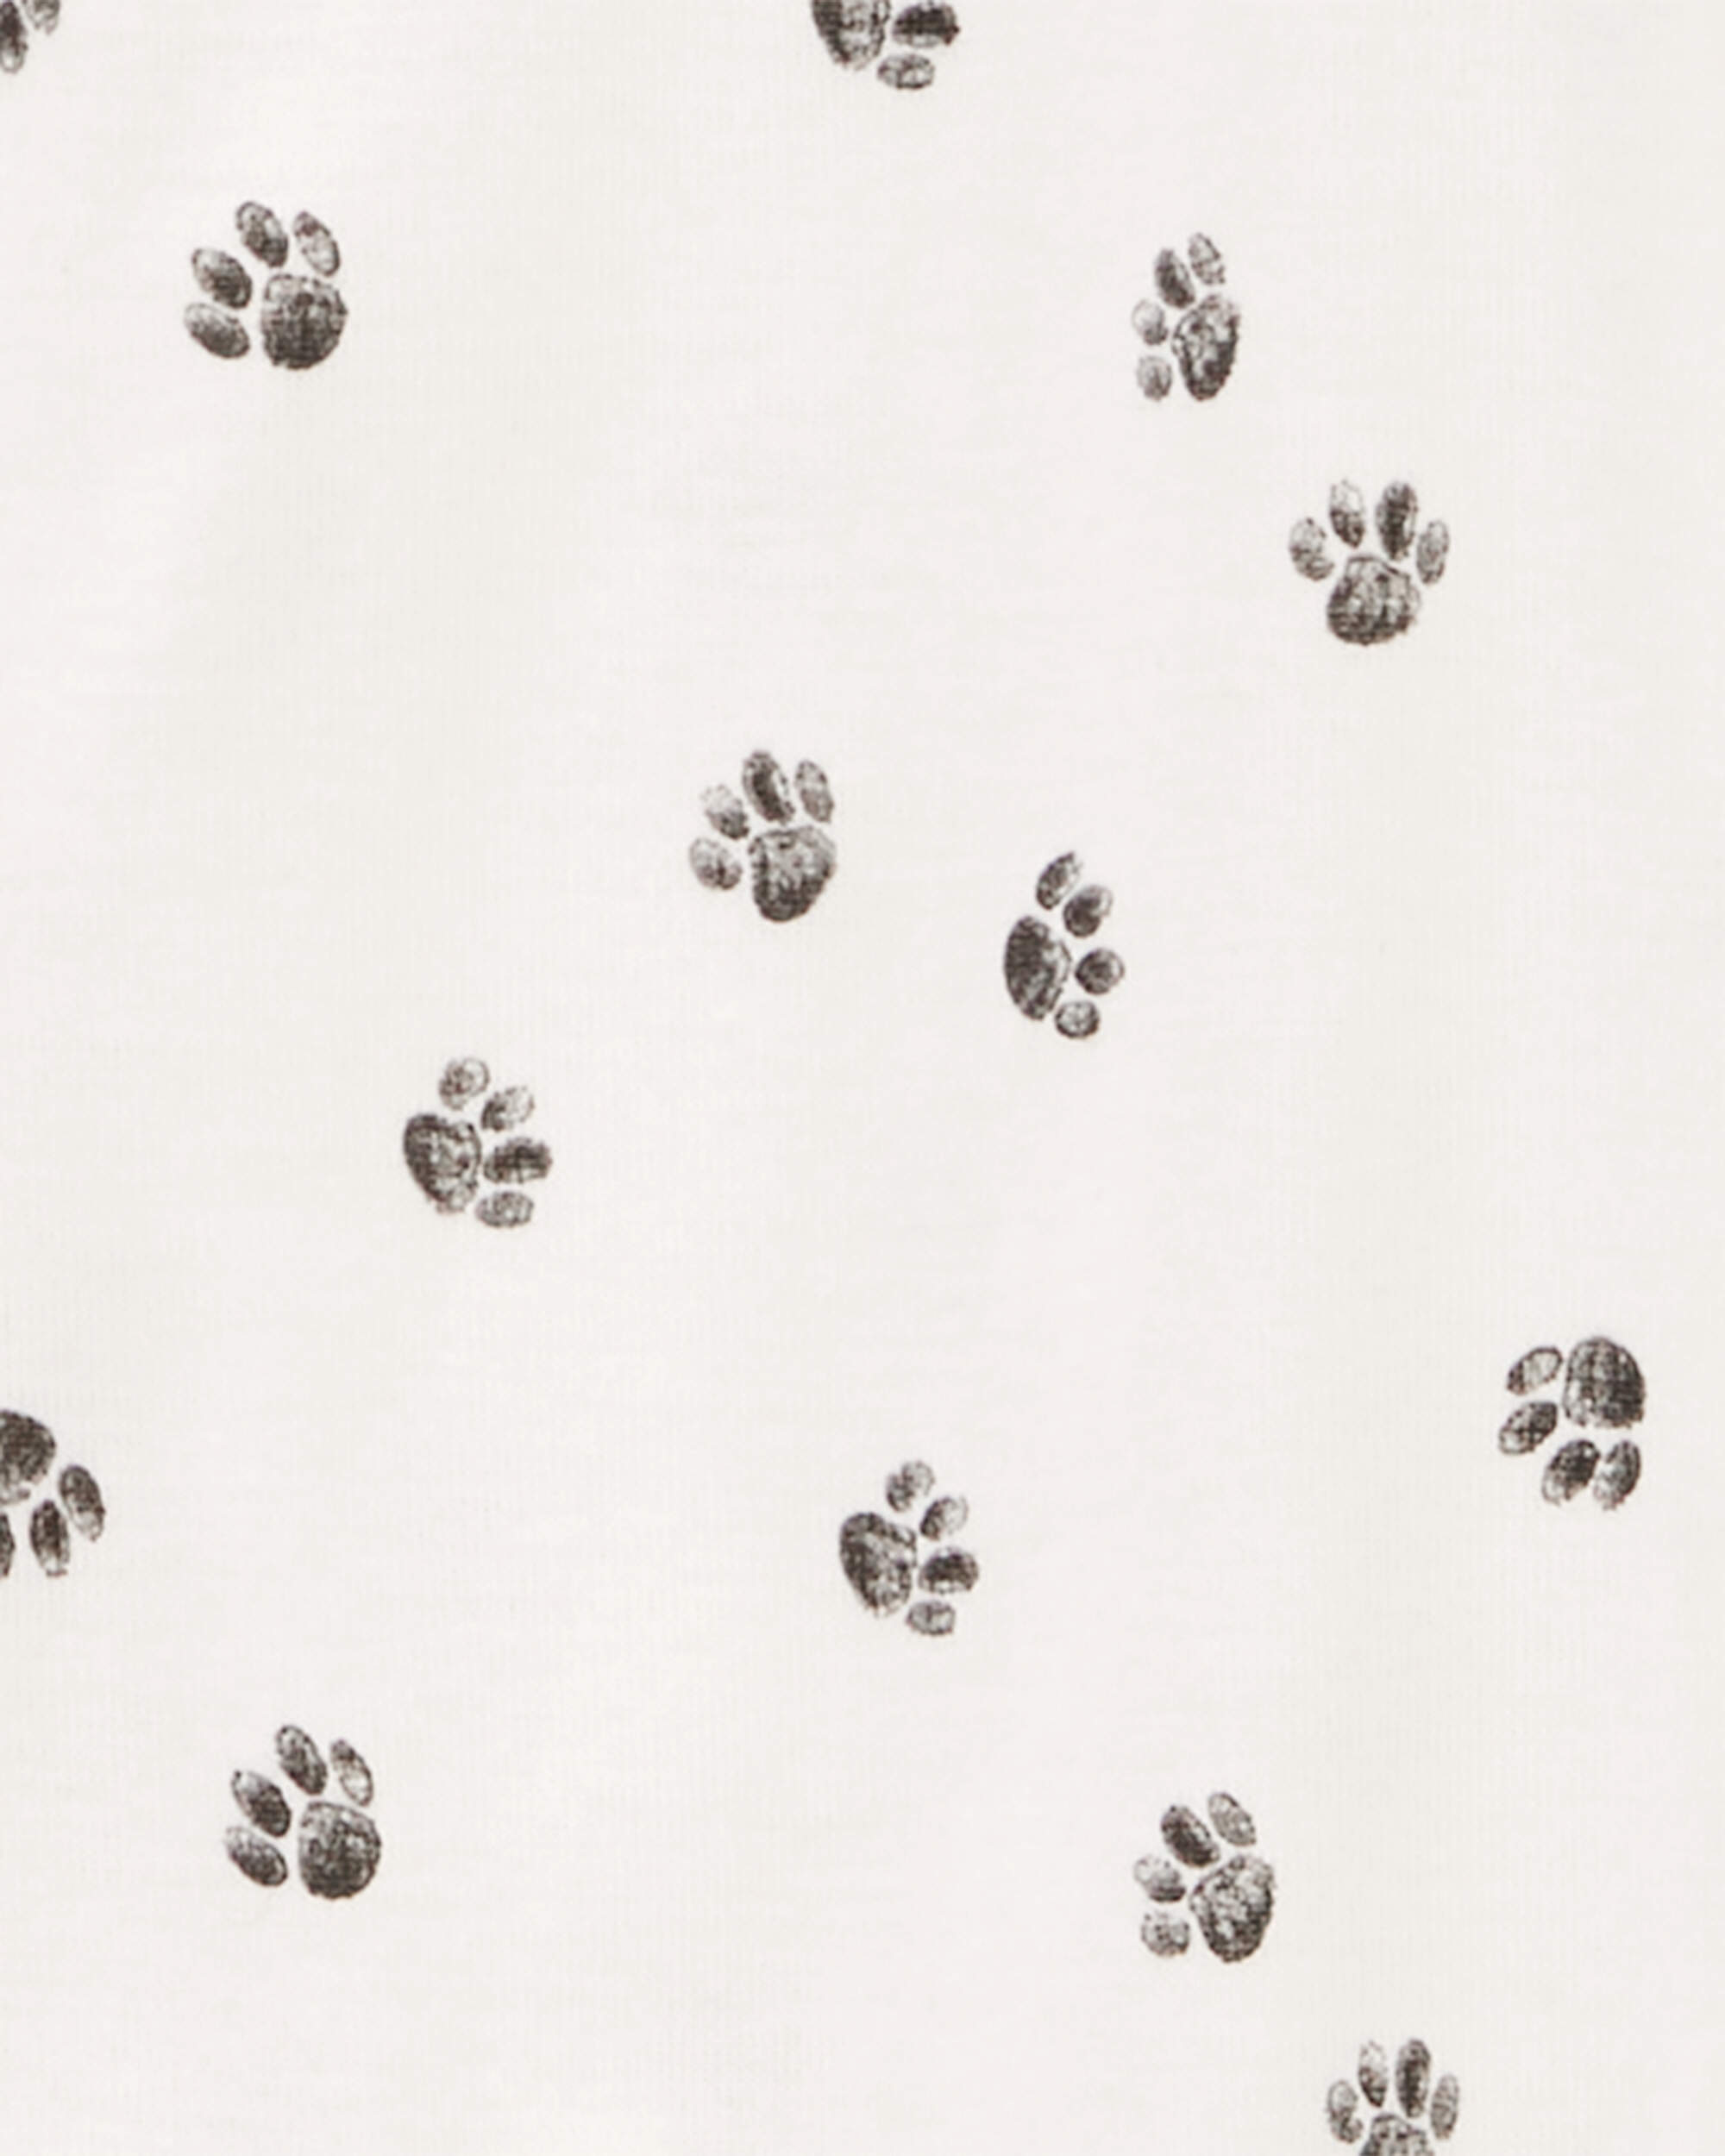 Toddler 1-Piece Tiger Paw 100% Snug Fit Cotton Footie Pyjamas